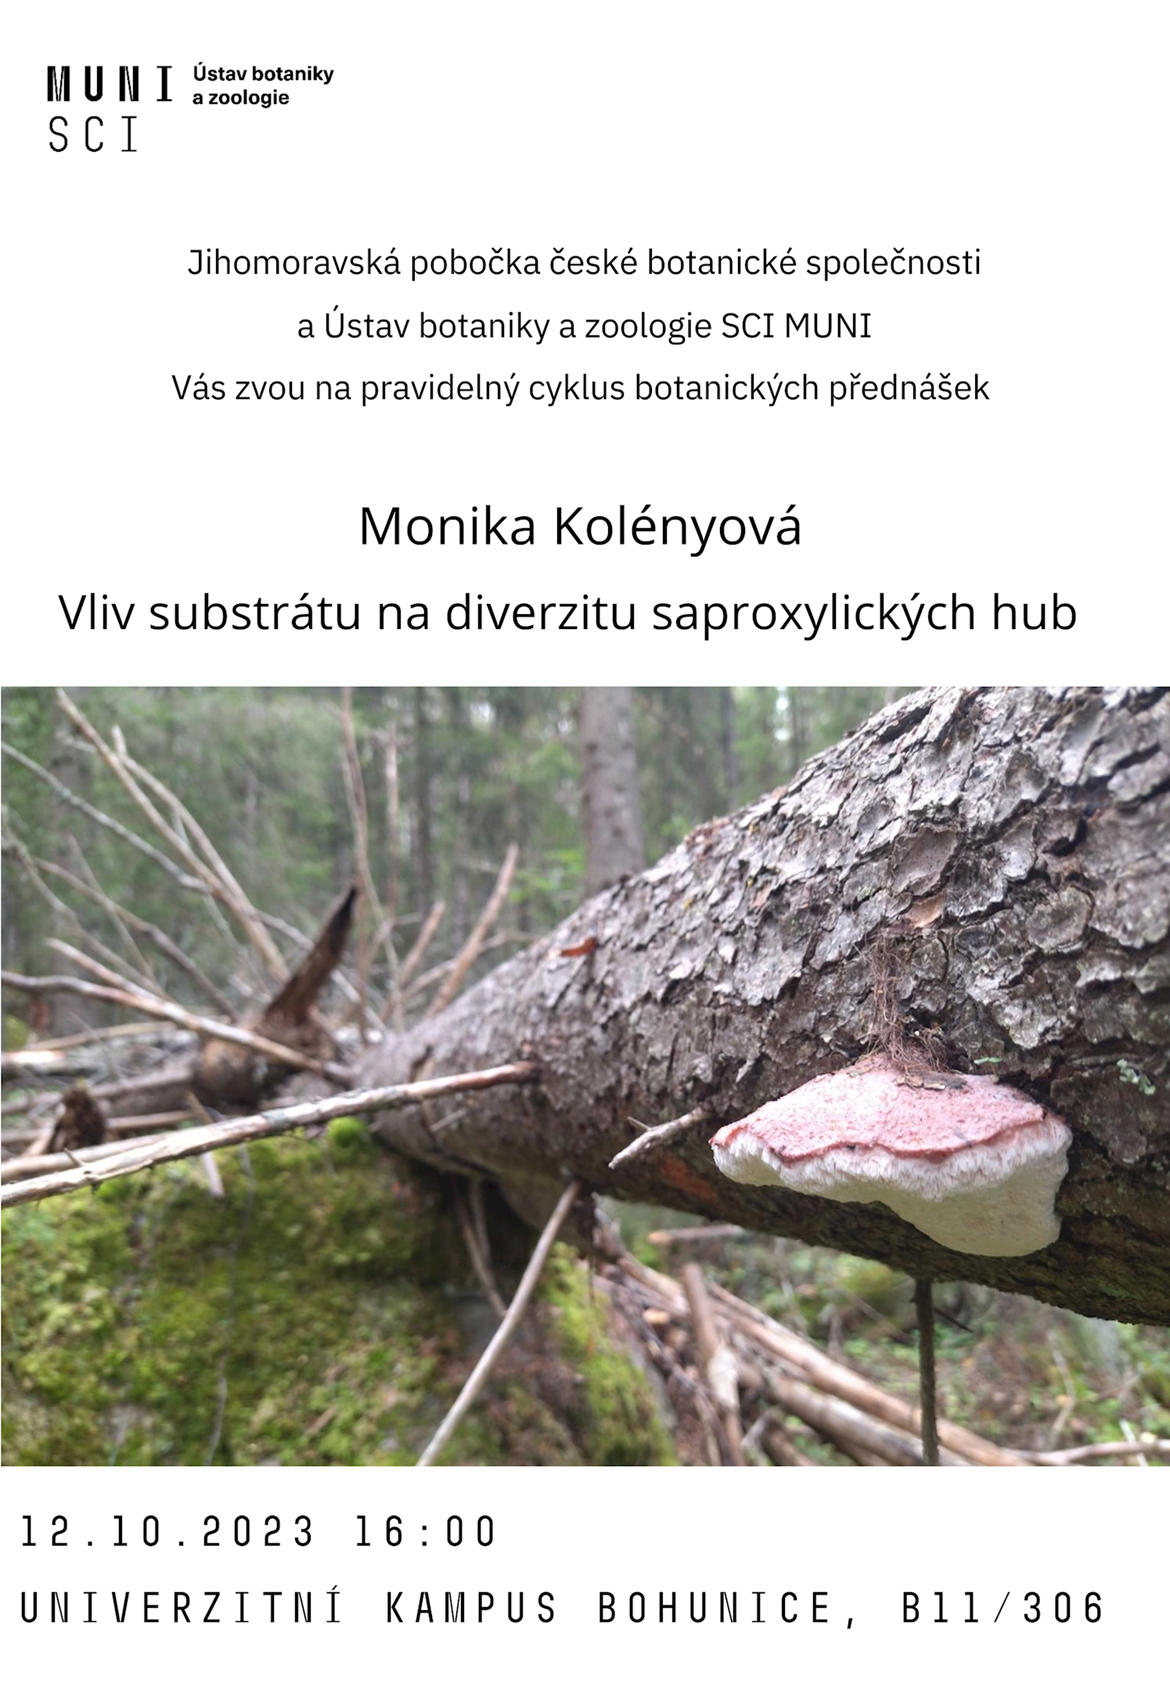 https://botzool.sci.muni.cz/news/2023_10_12monika_kolenyova__vliv_substratu_na_diverzitu_saproxylickych_hub.pdf